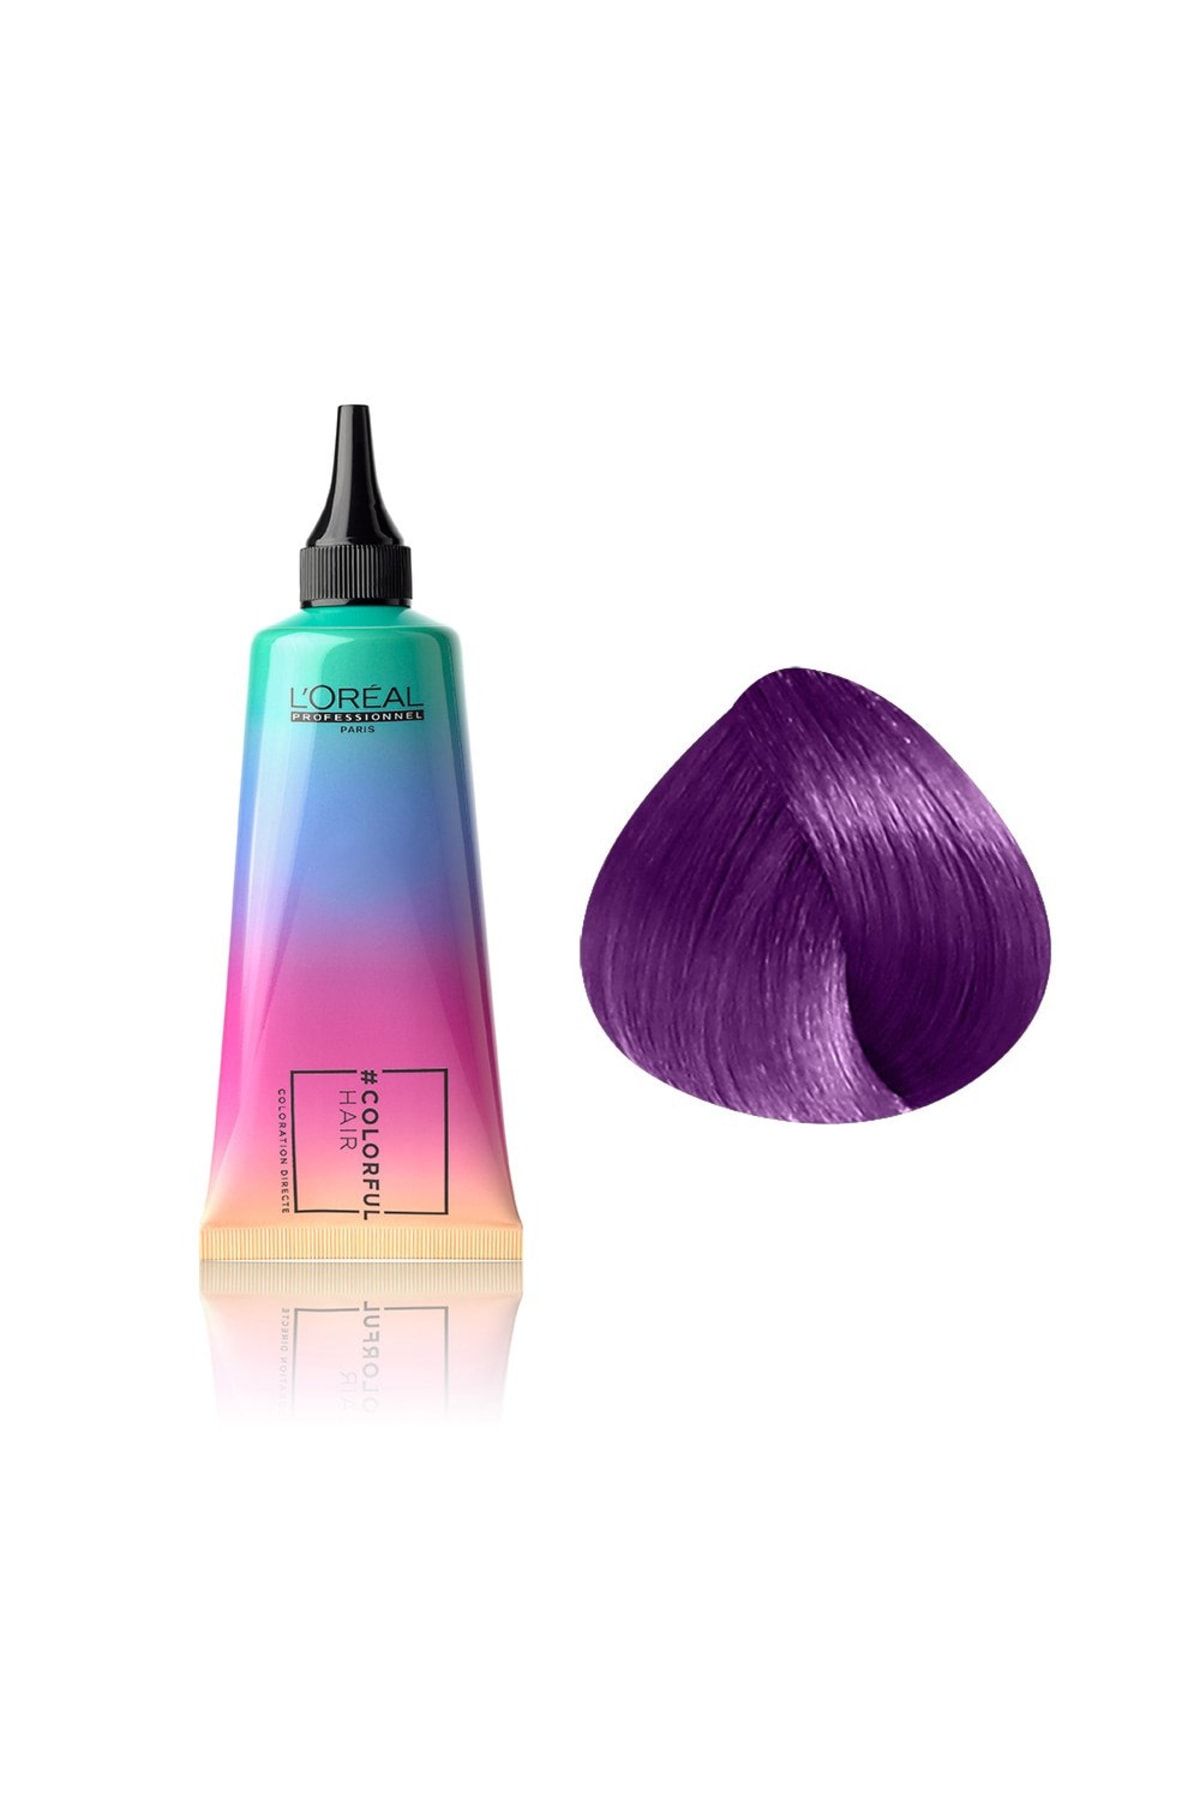 L'oreal Professionnel Colorful Hair Electric Purple Natural Purple Hair Color Cream 90ml